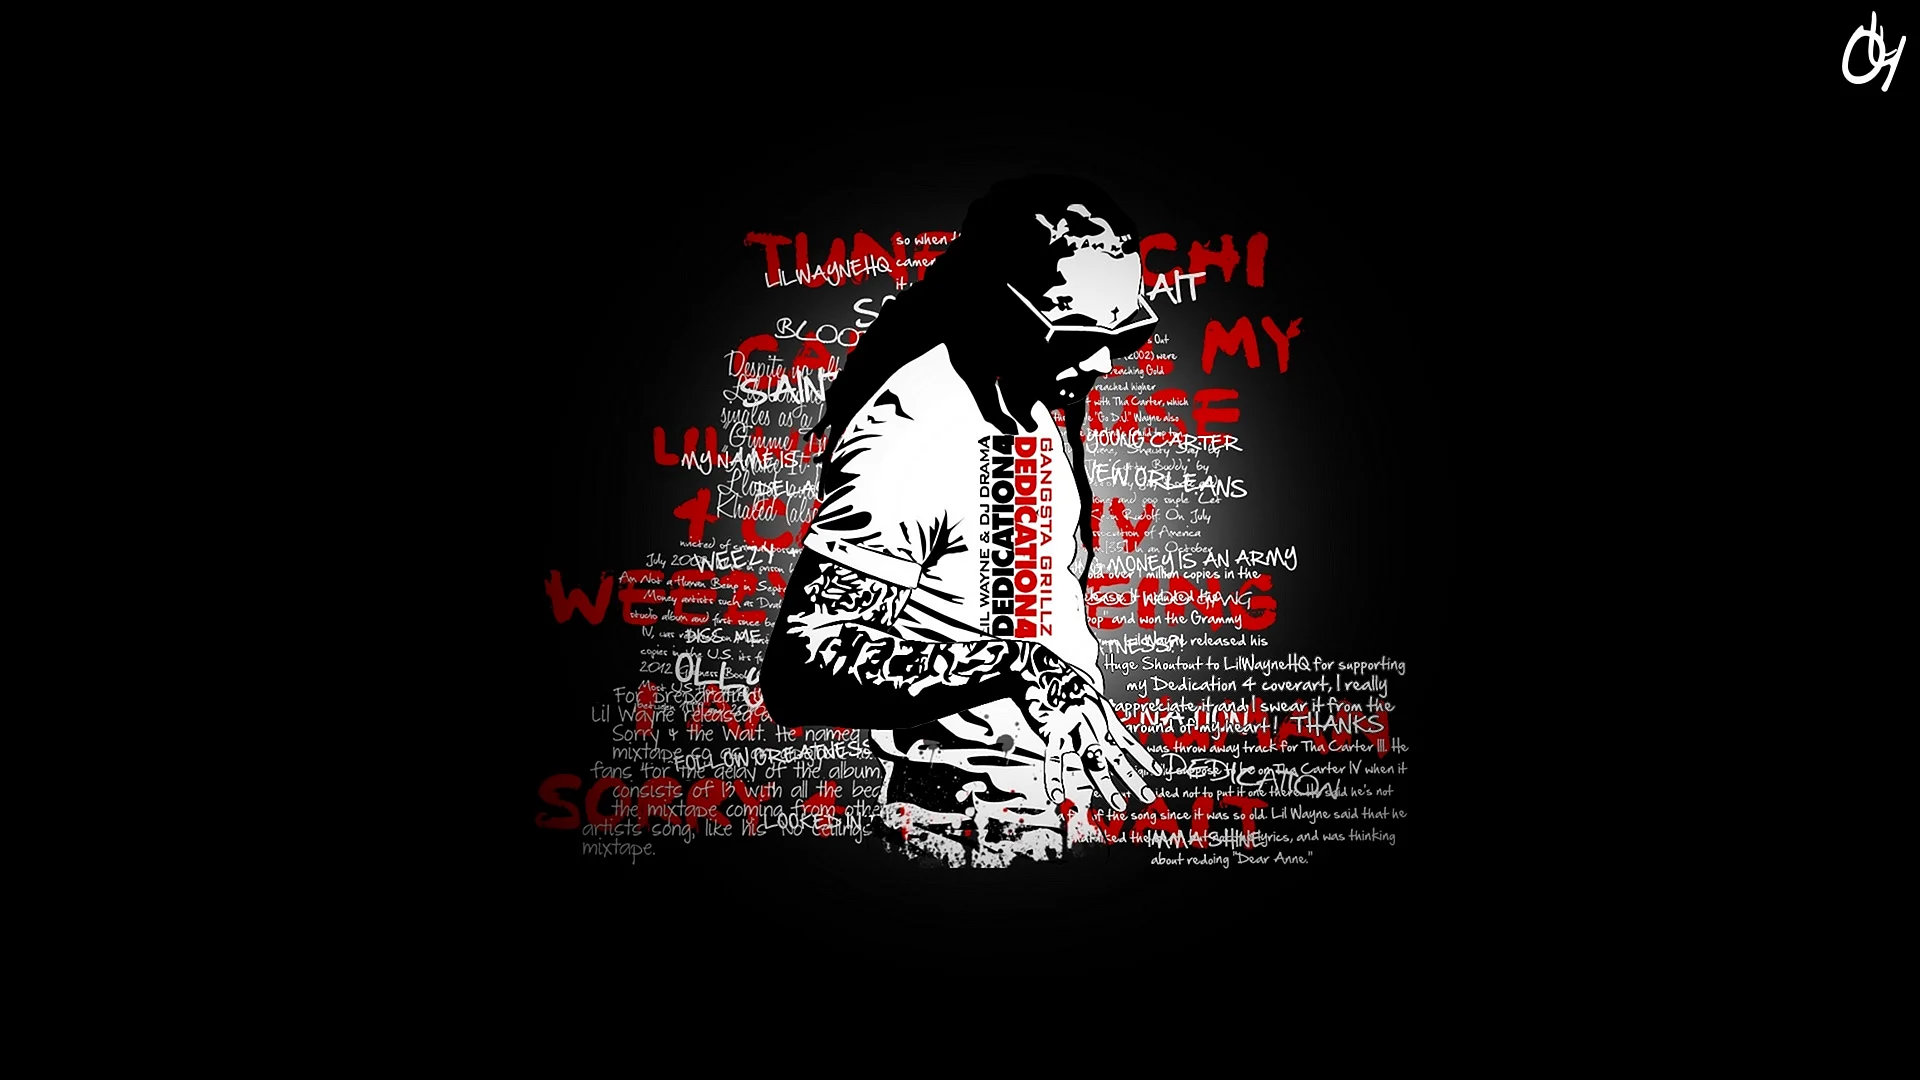 Lil Wayne dedication 4